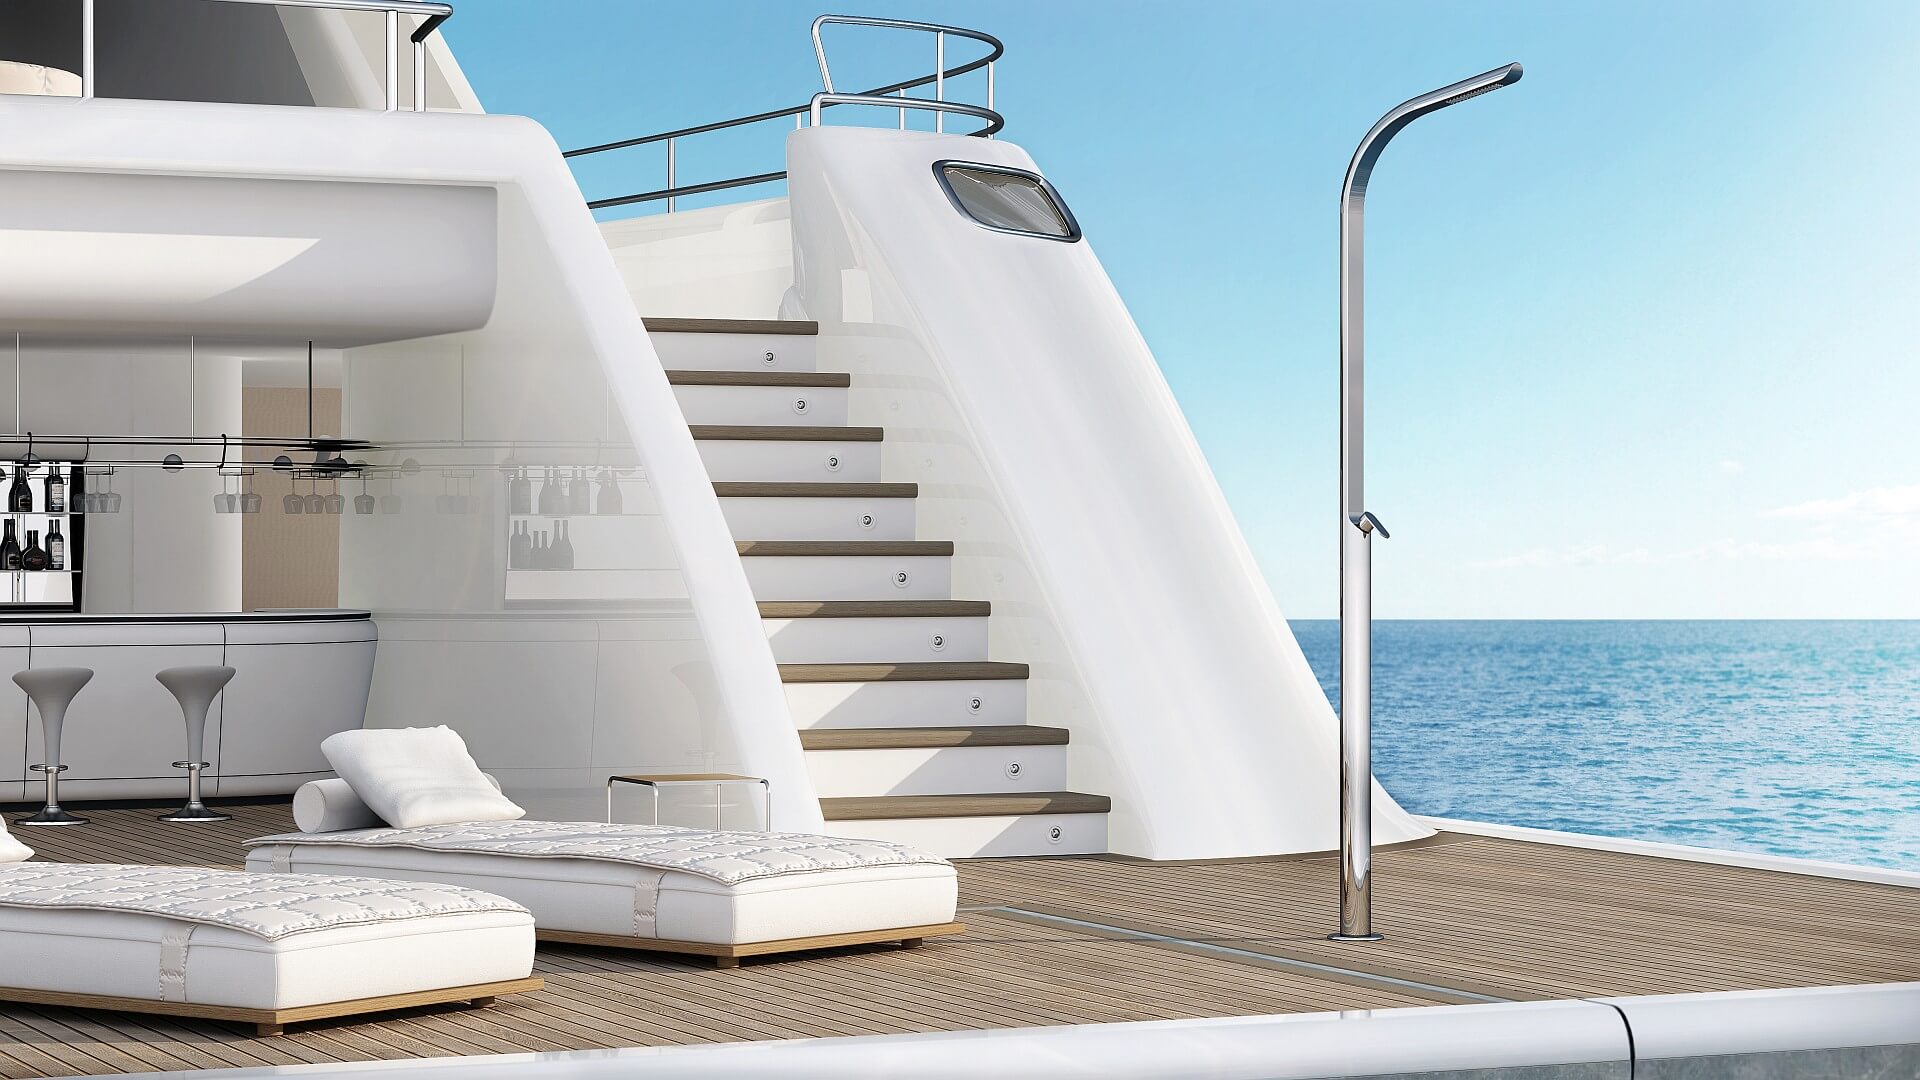 Imagínese la ducha al aire libre, piscina, jardín - Dream Yacht Inoxstyle